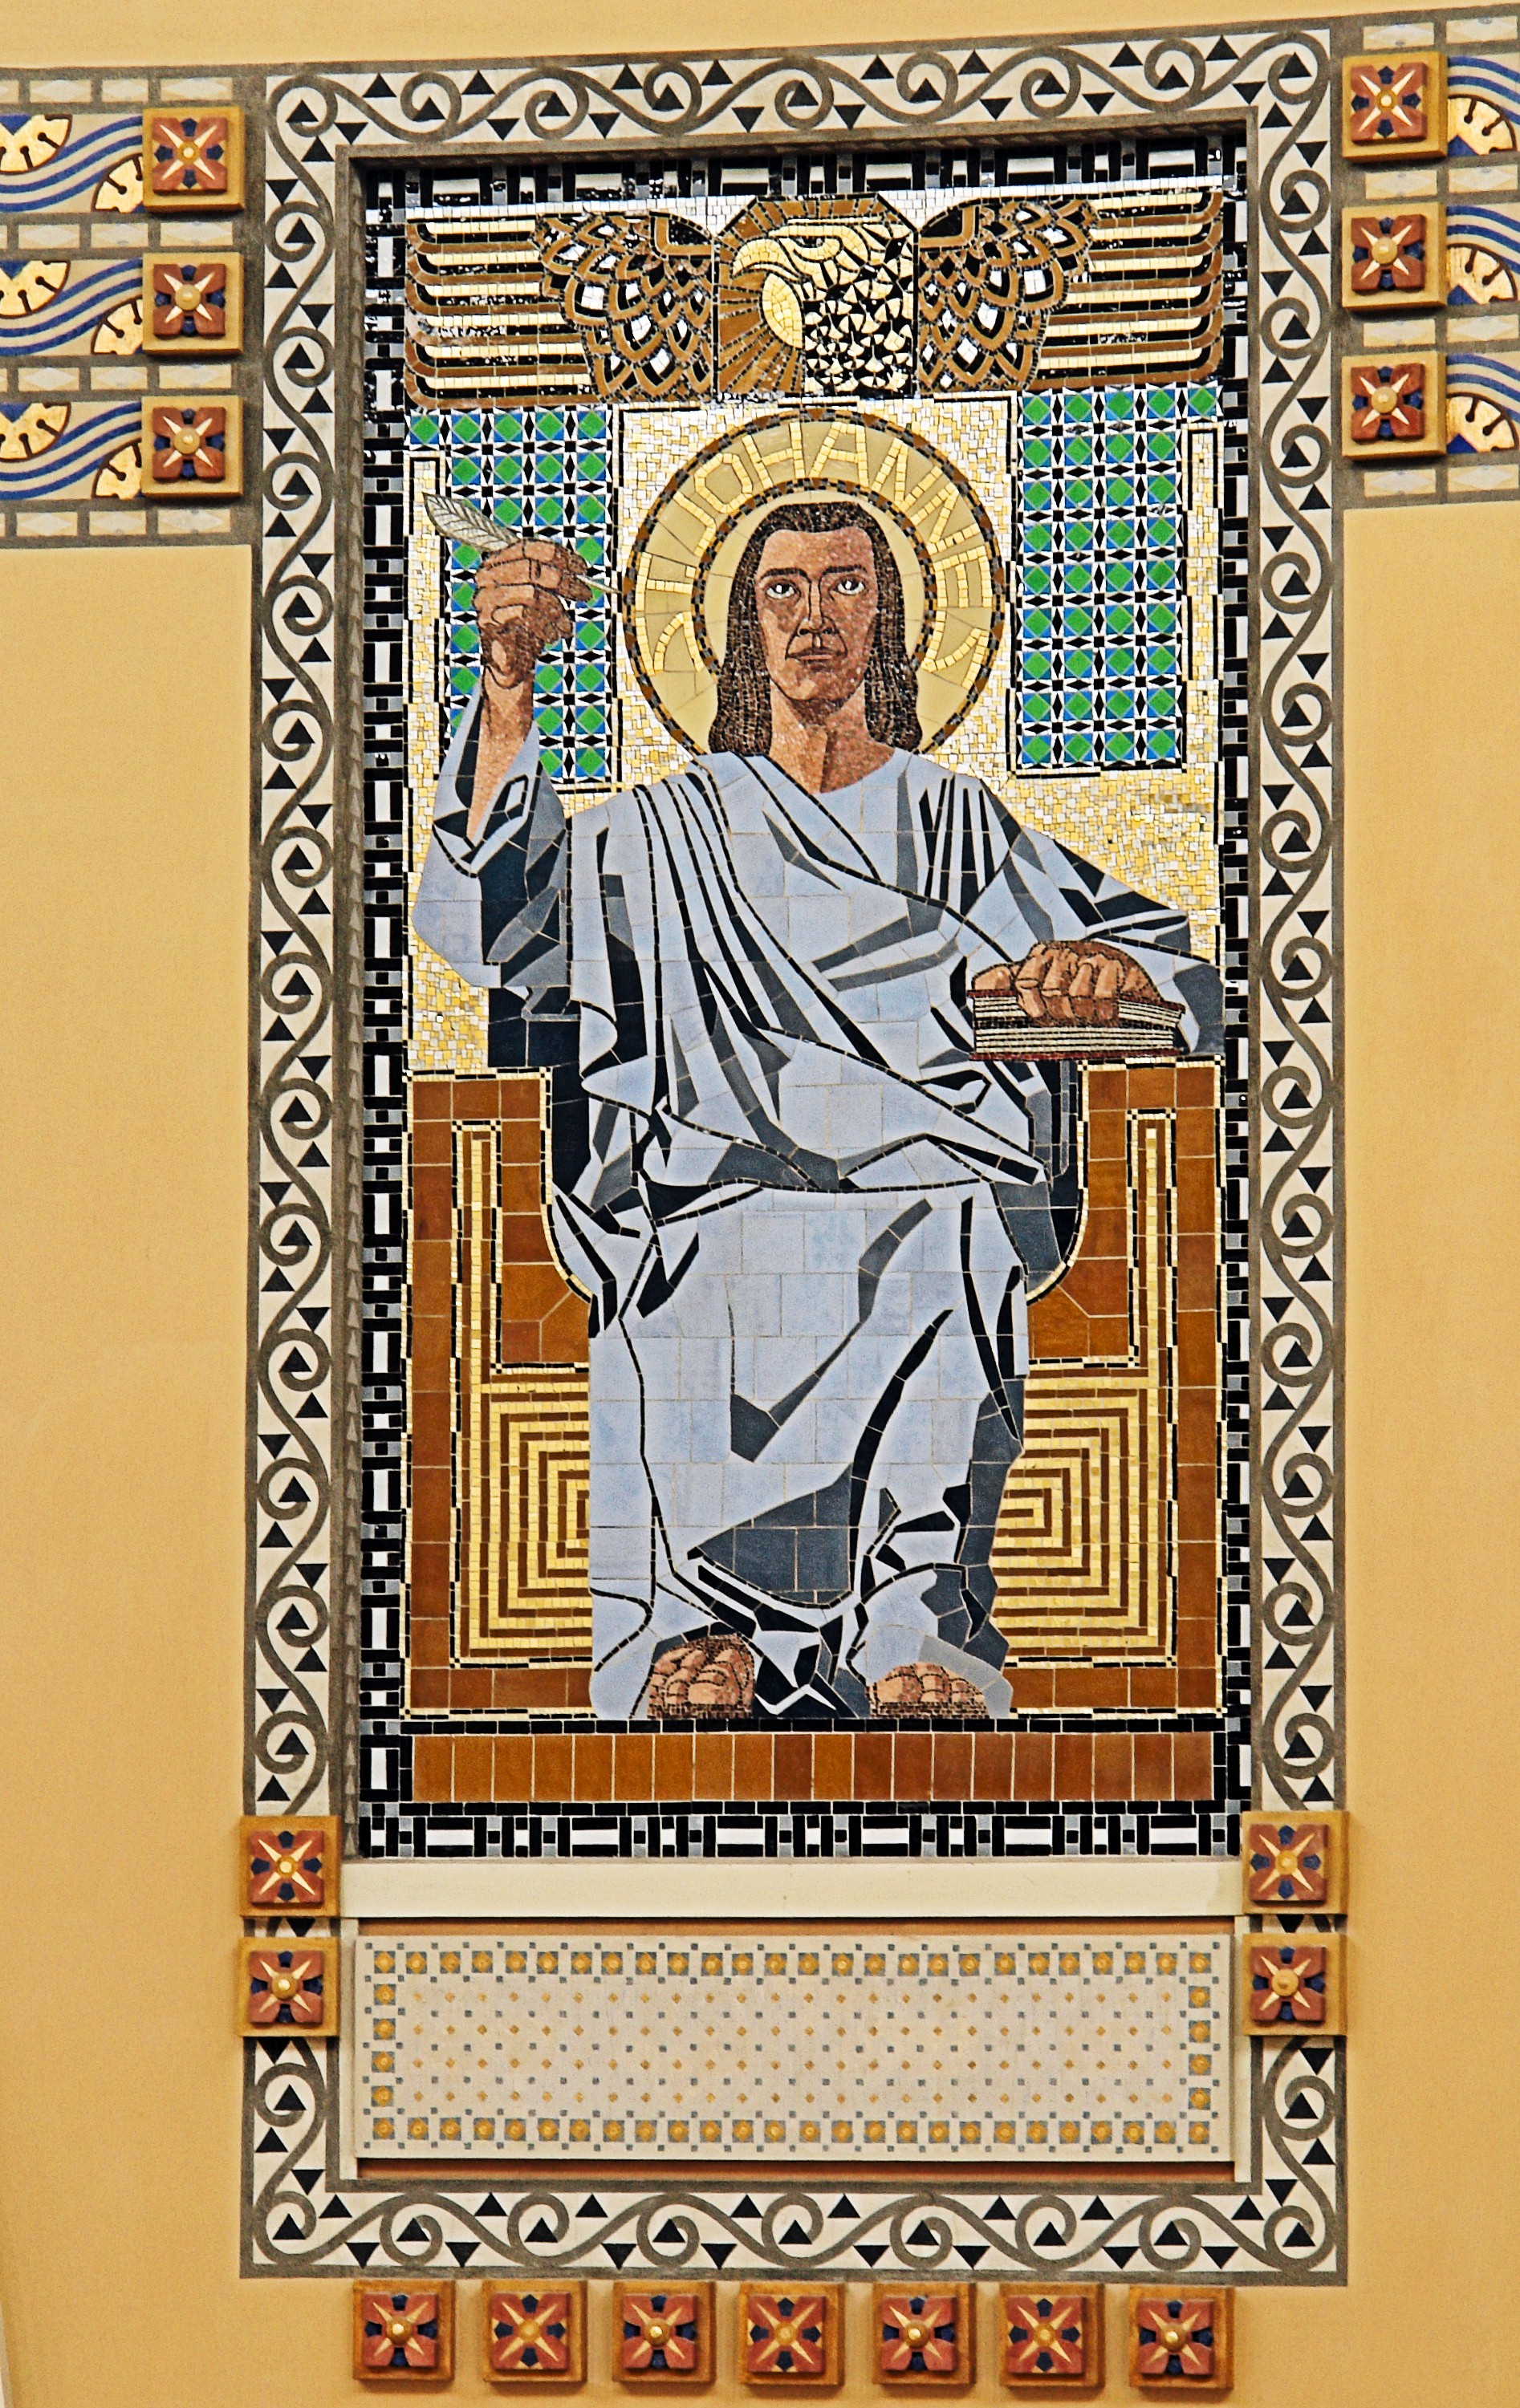 Jugendstil Mosaic St John - Friedhofskirche zum Heiligen Karl Borromäus - Max Hegele - Vienna